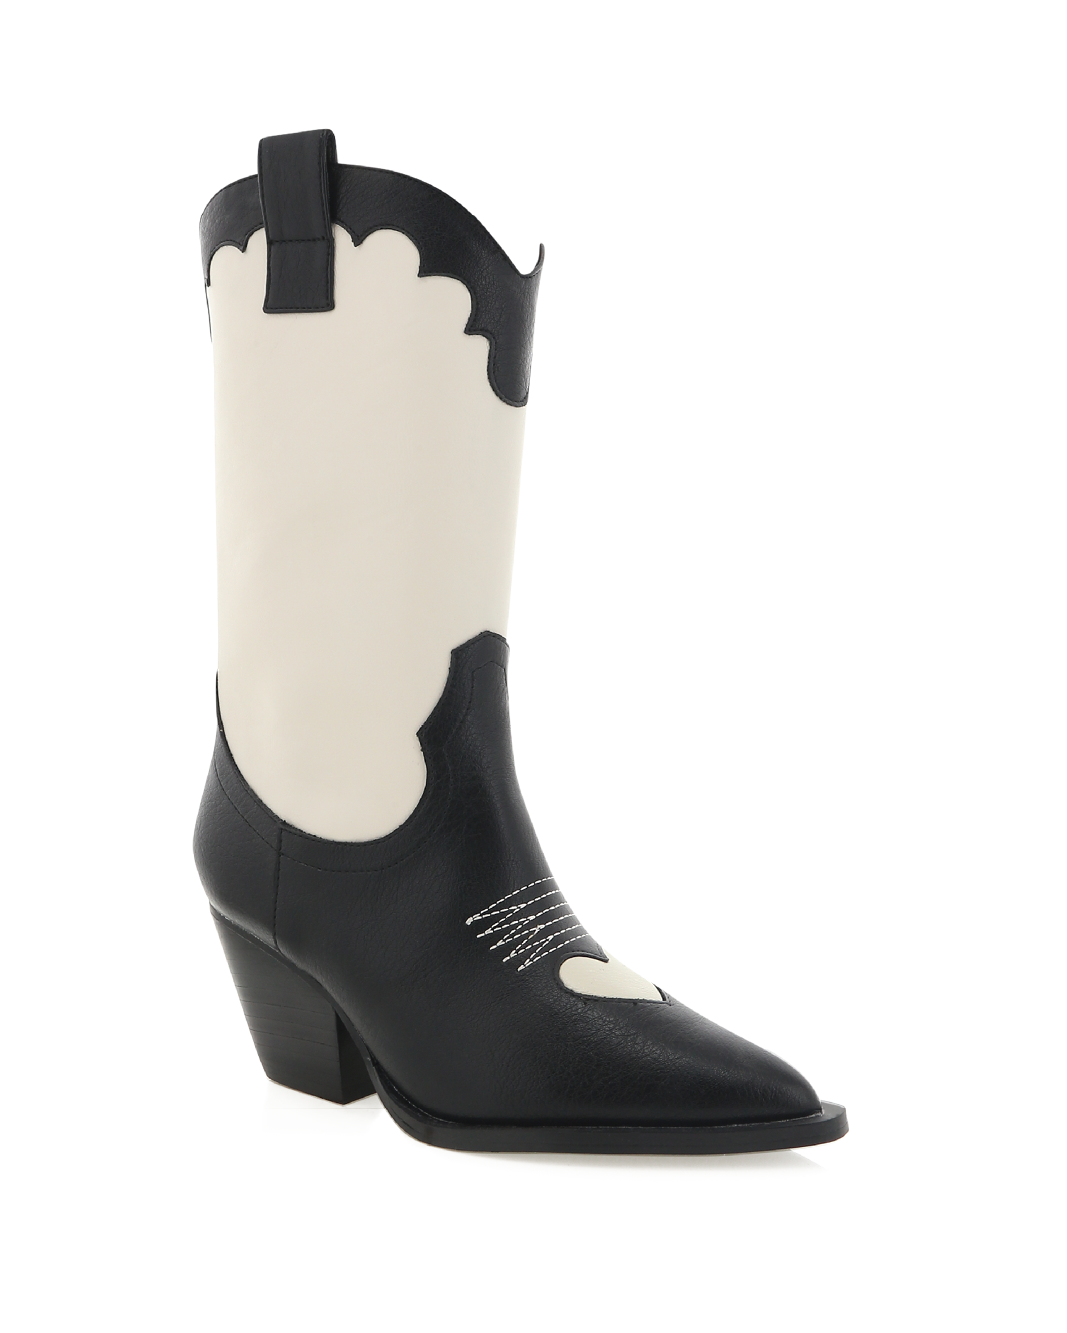 ADALINE - BLACK-IVORY-Boots-Billini-BILLINI USA